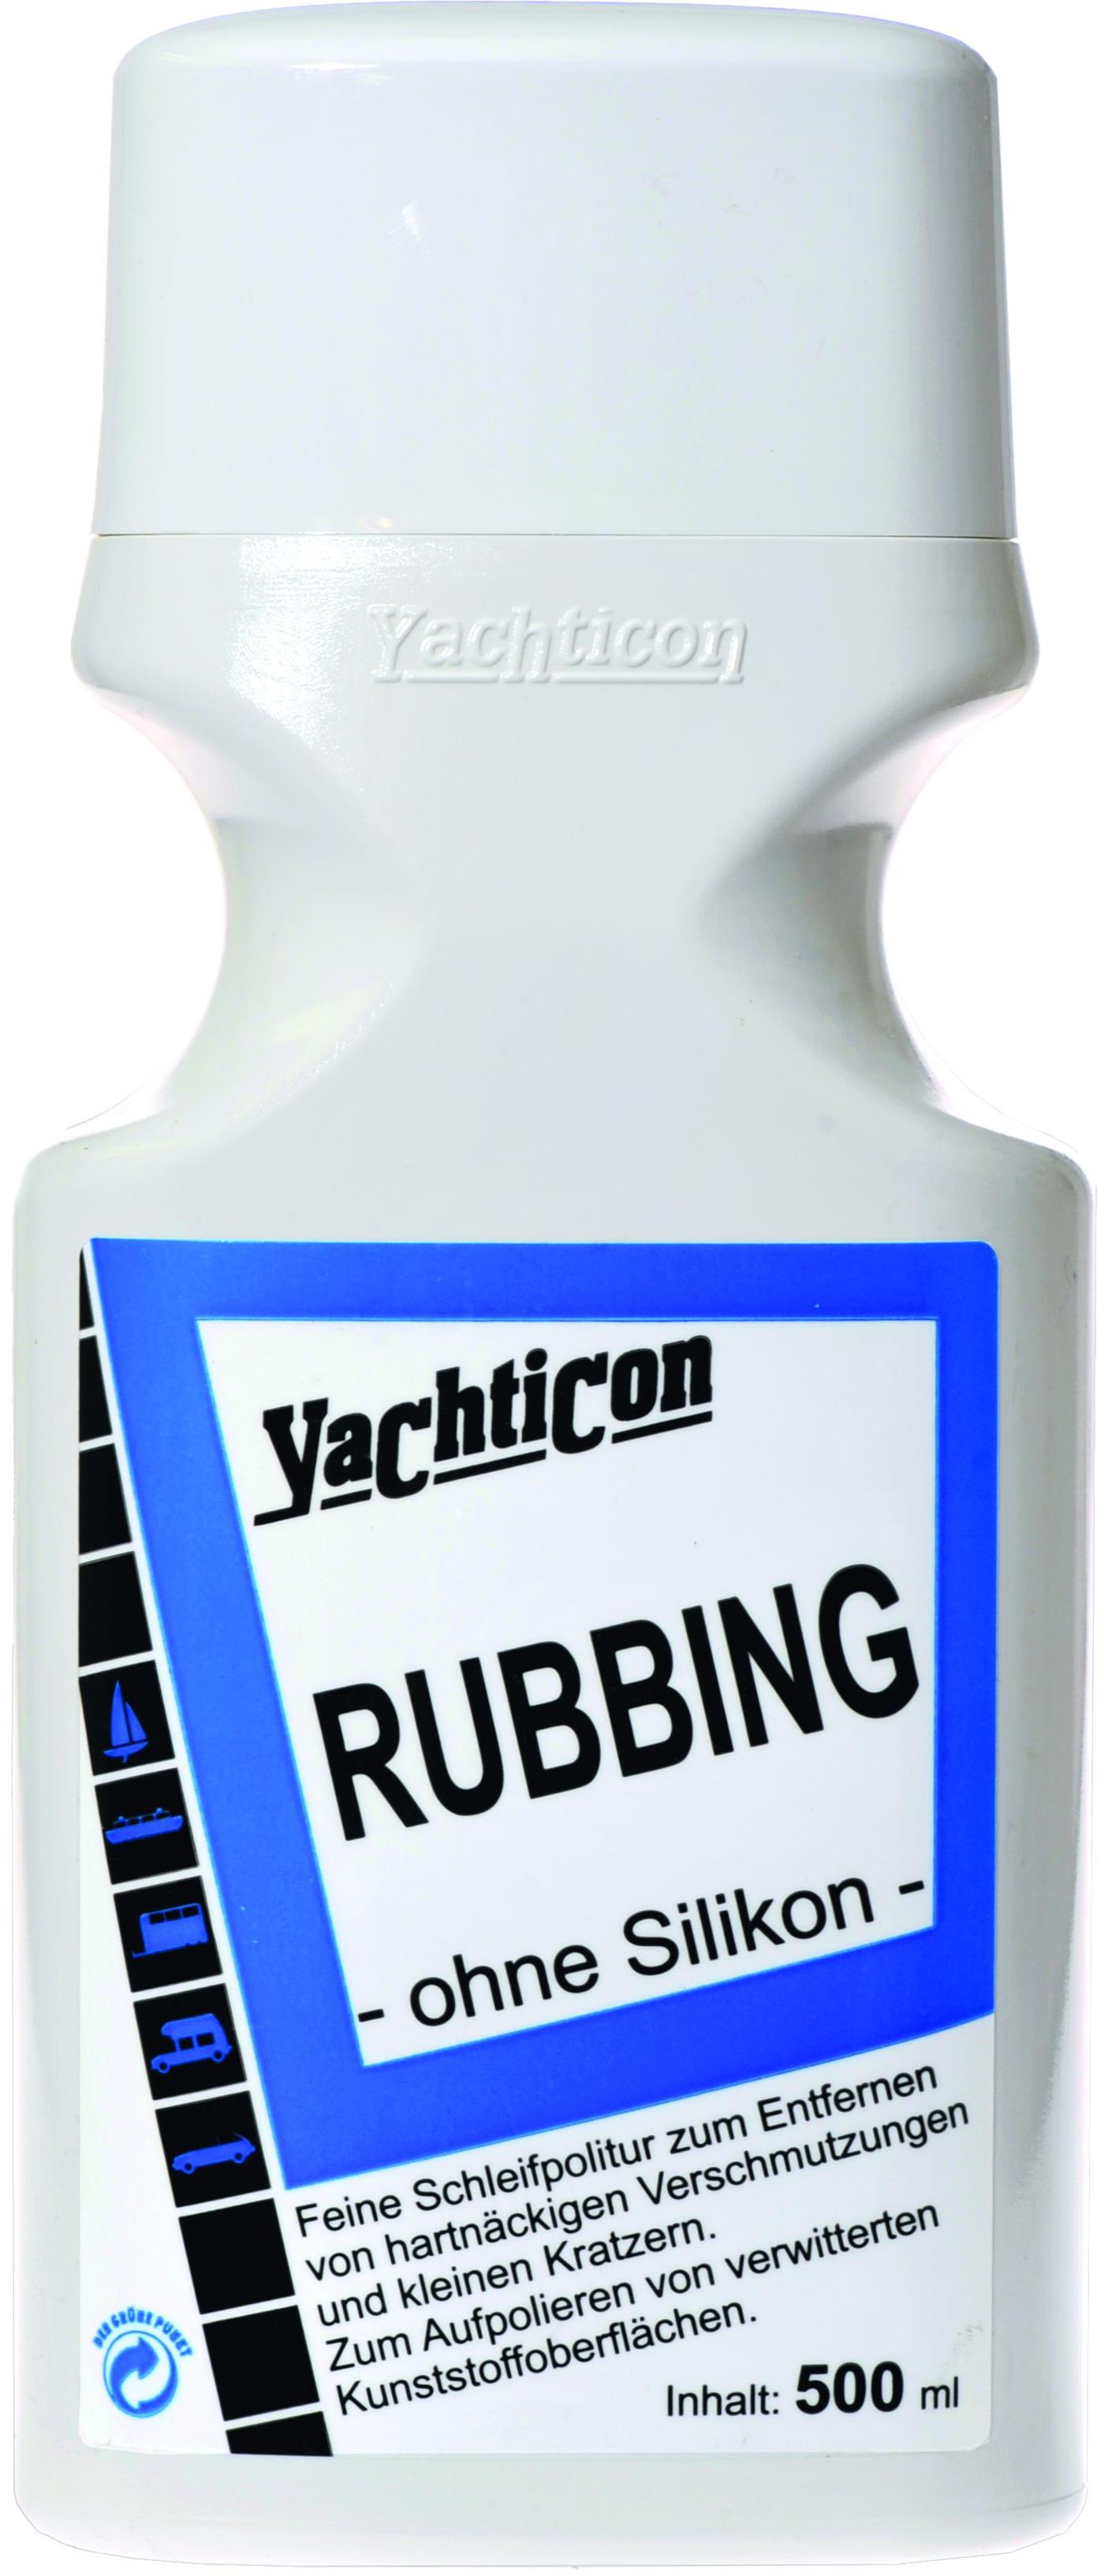 Yachticon Rubbing 500 ml